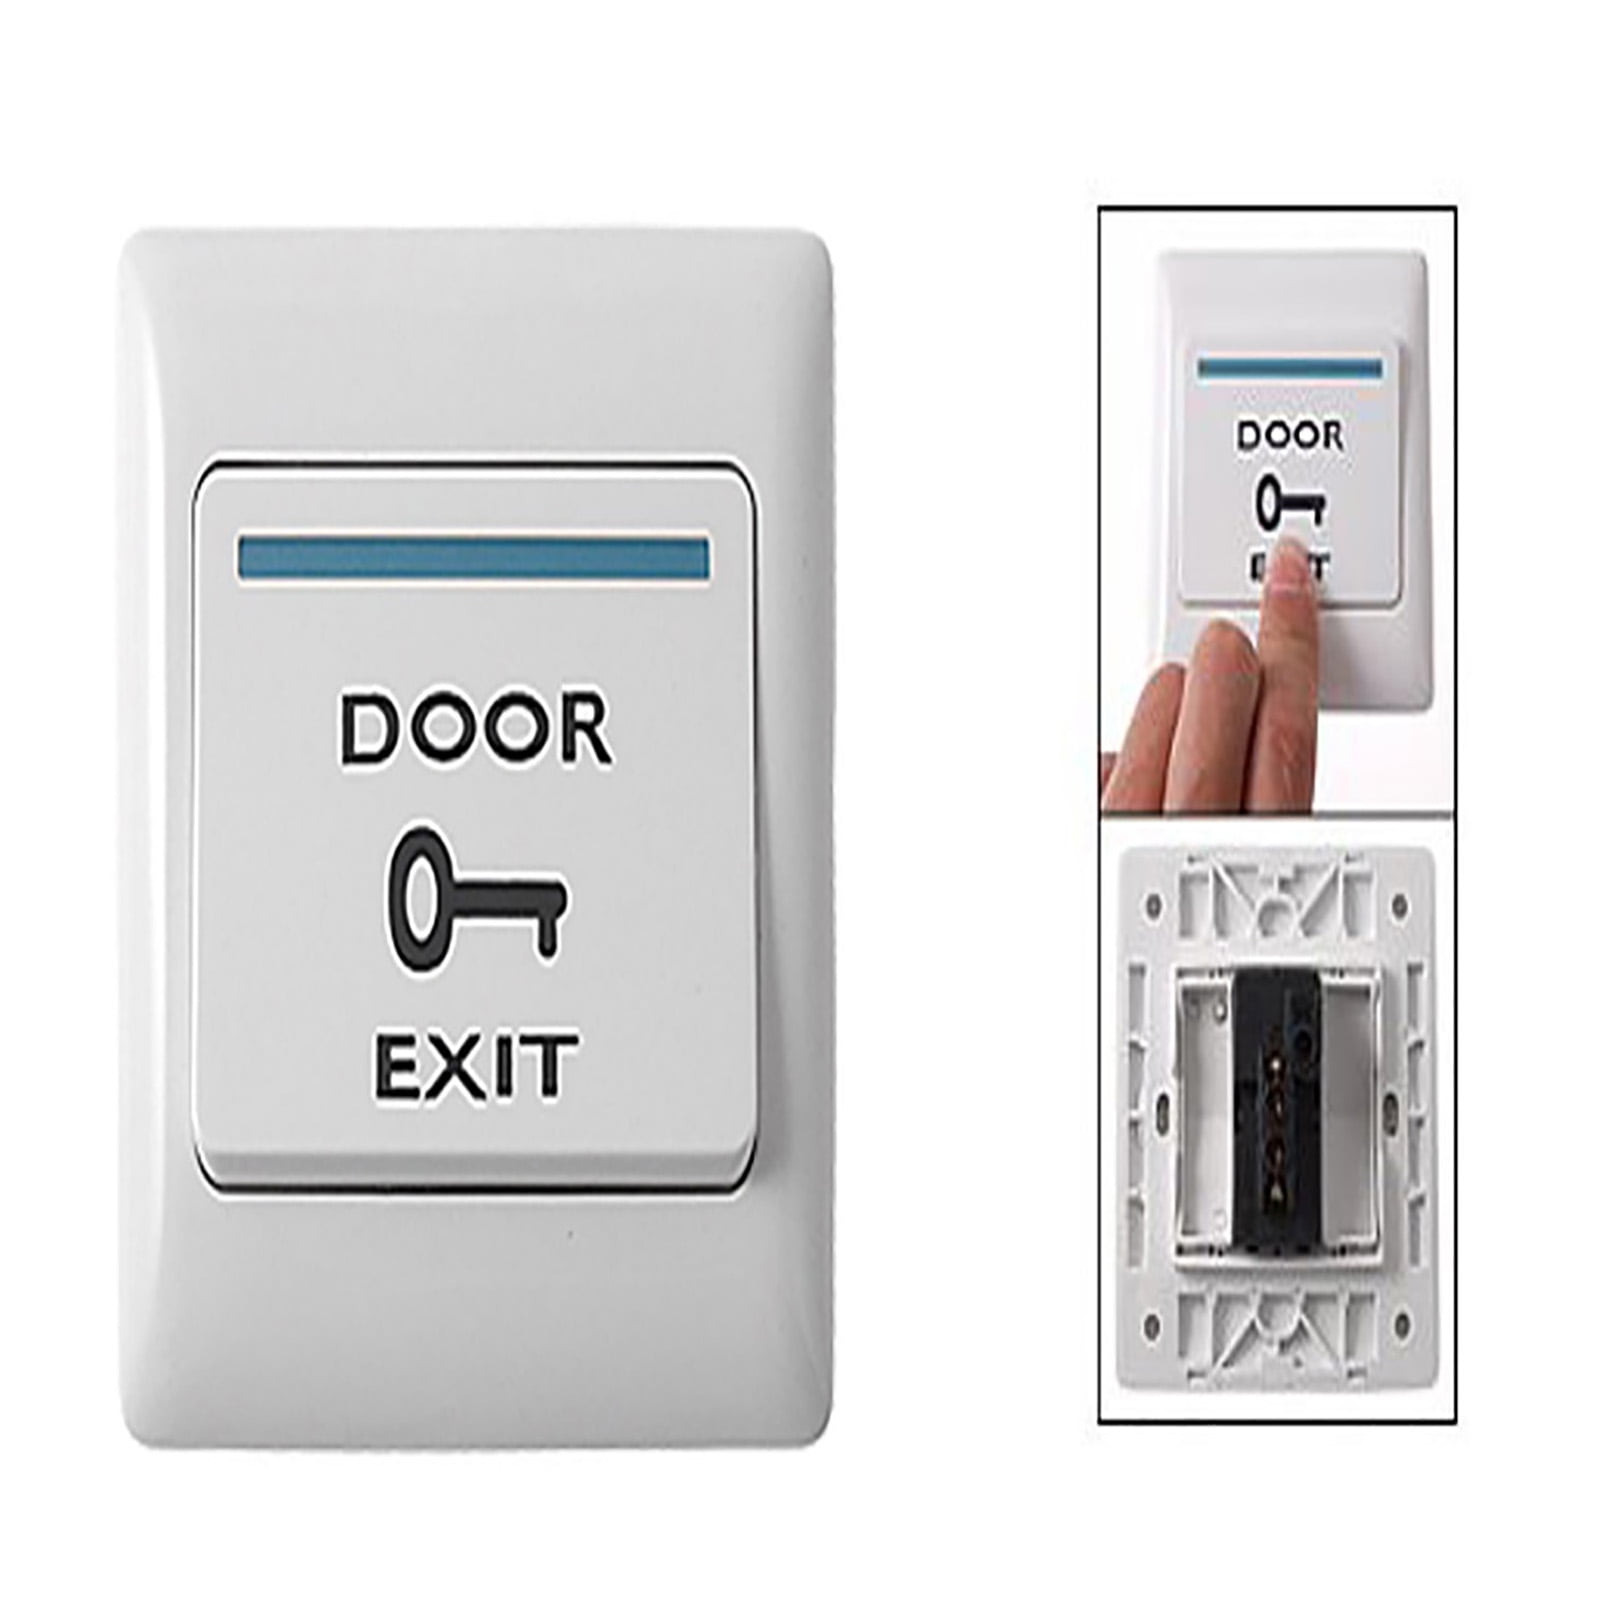 RFID Door Access Control Kit Set w/ Electric Magnetic Lock for Single Door S260 